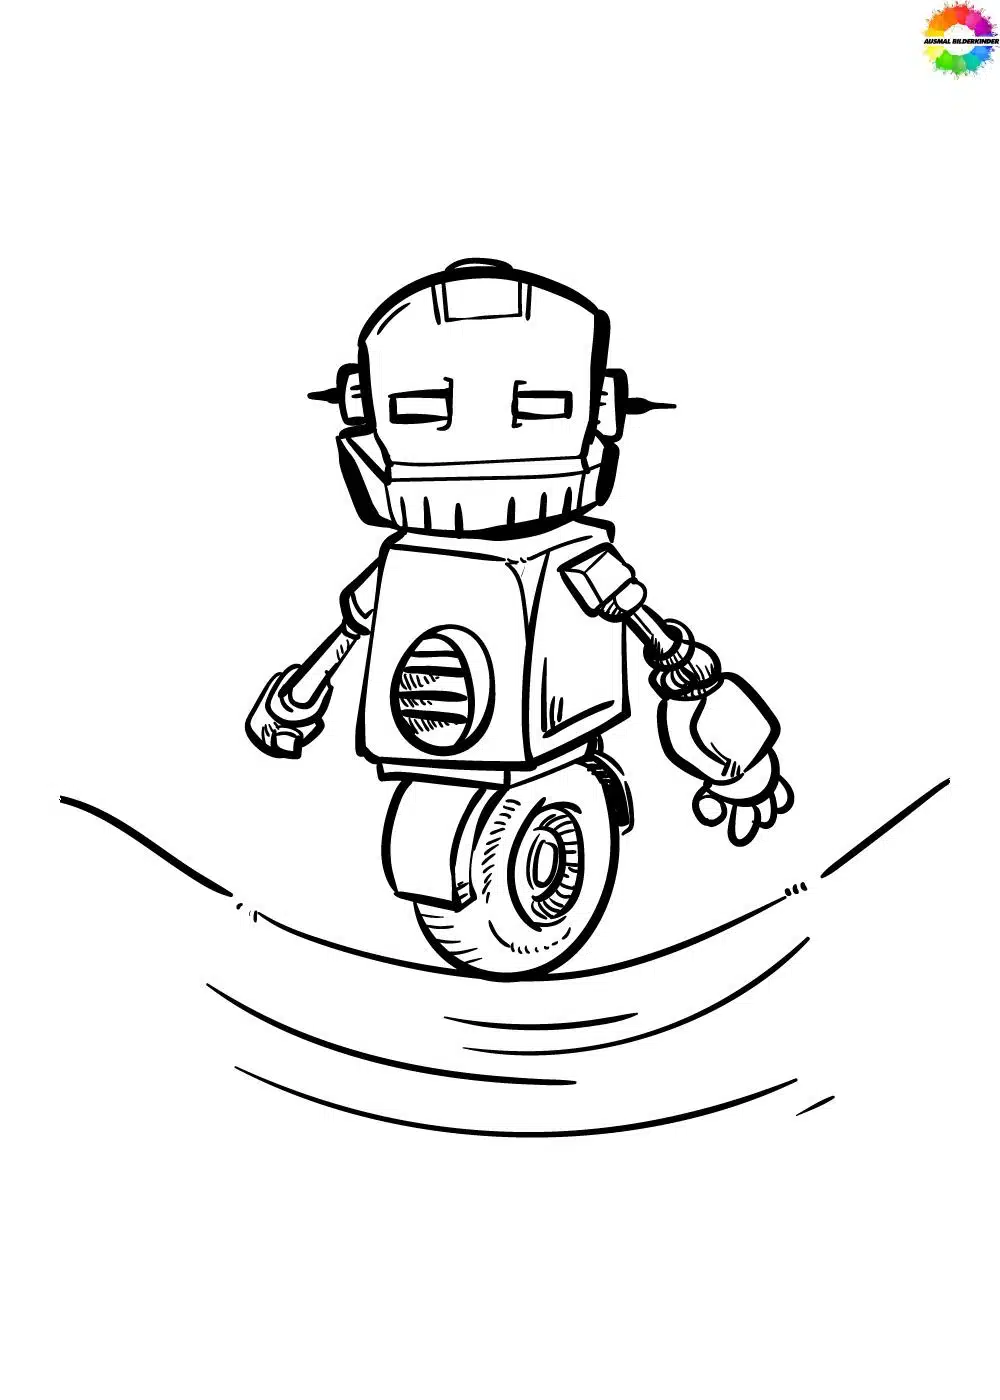 Roboter 01